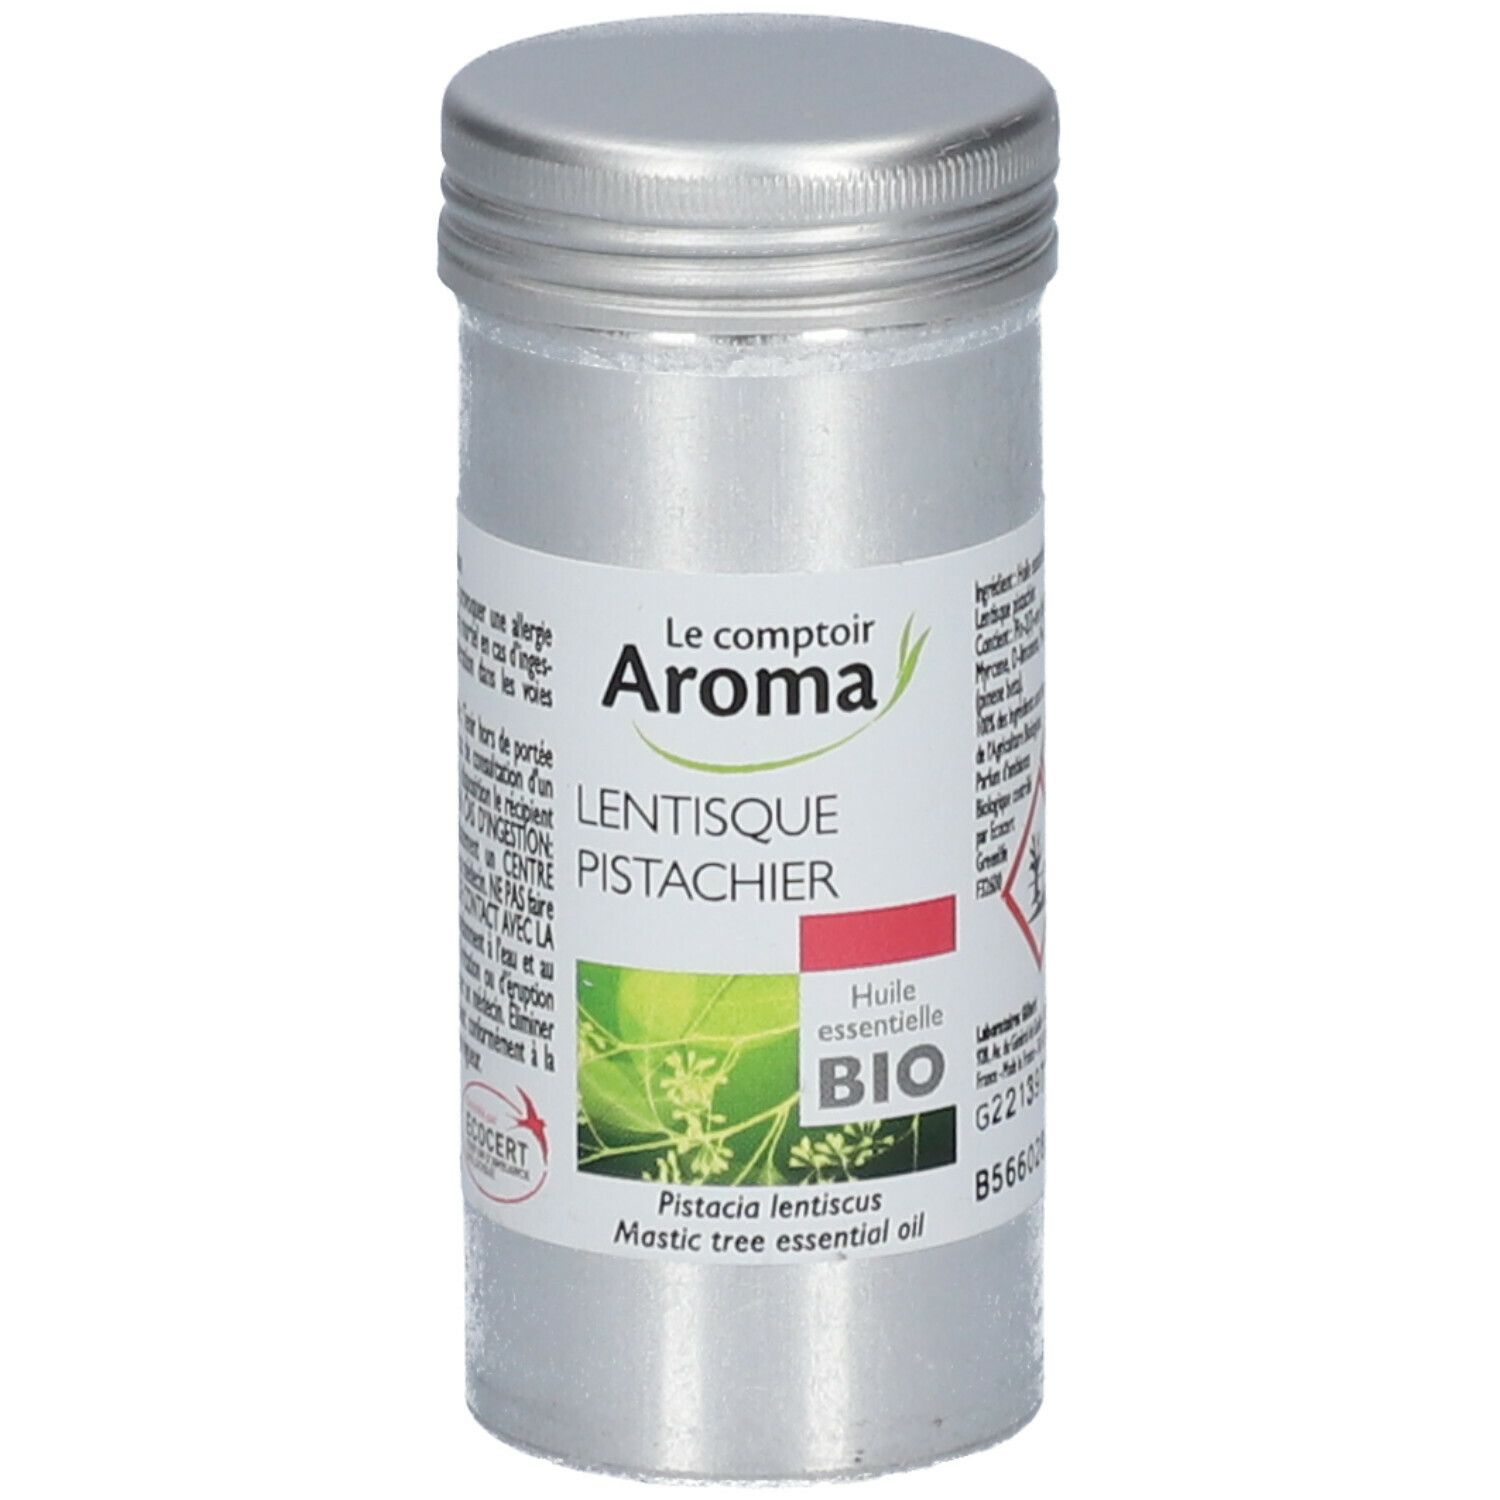 Le Comptoir Aroma Huile essentielle Lentisque pistachier Bio